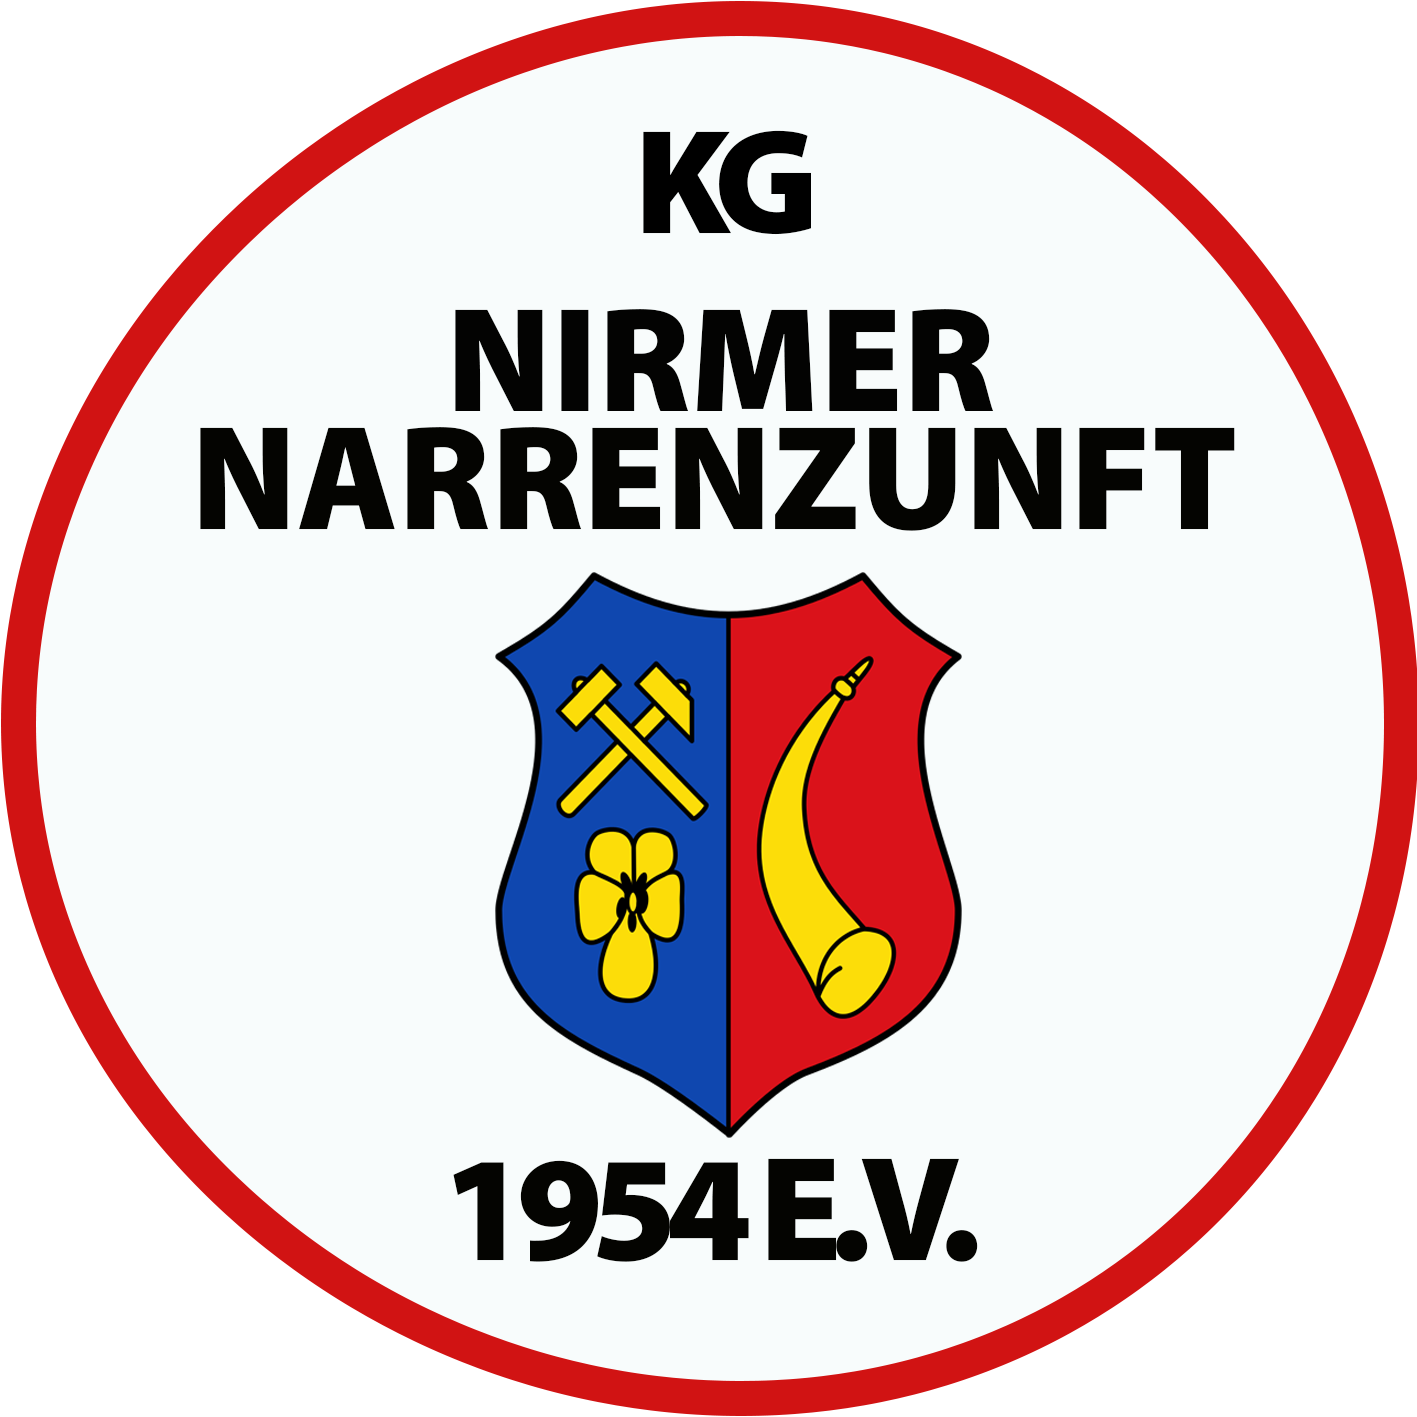 KG Nirmer Narrenzunft